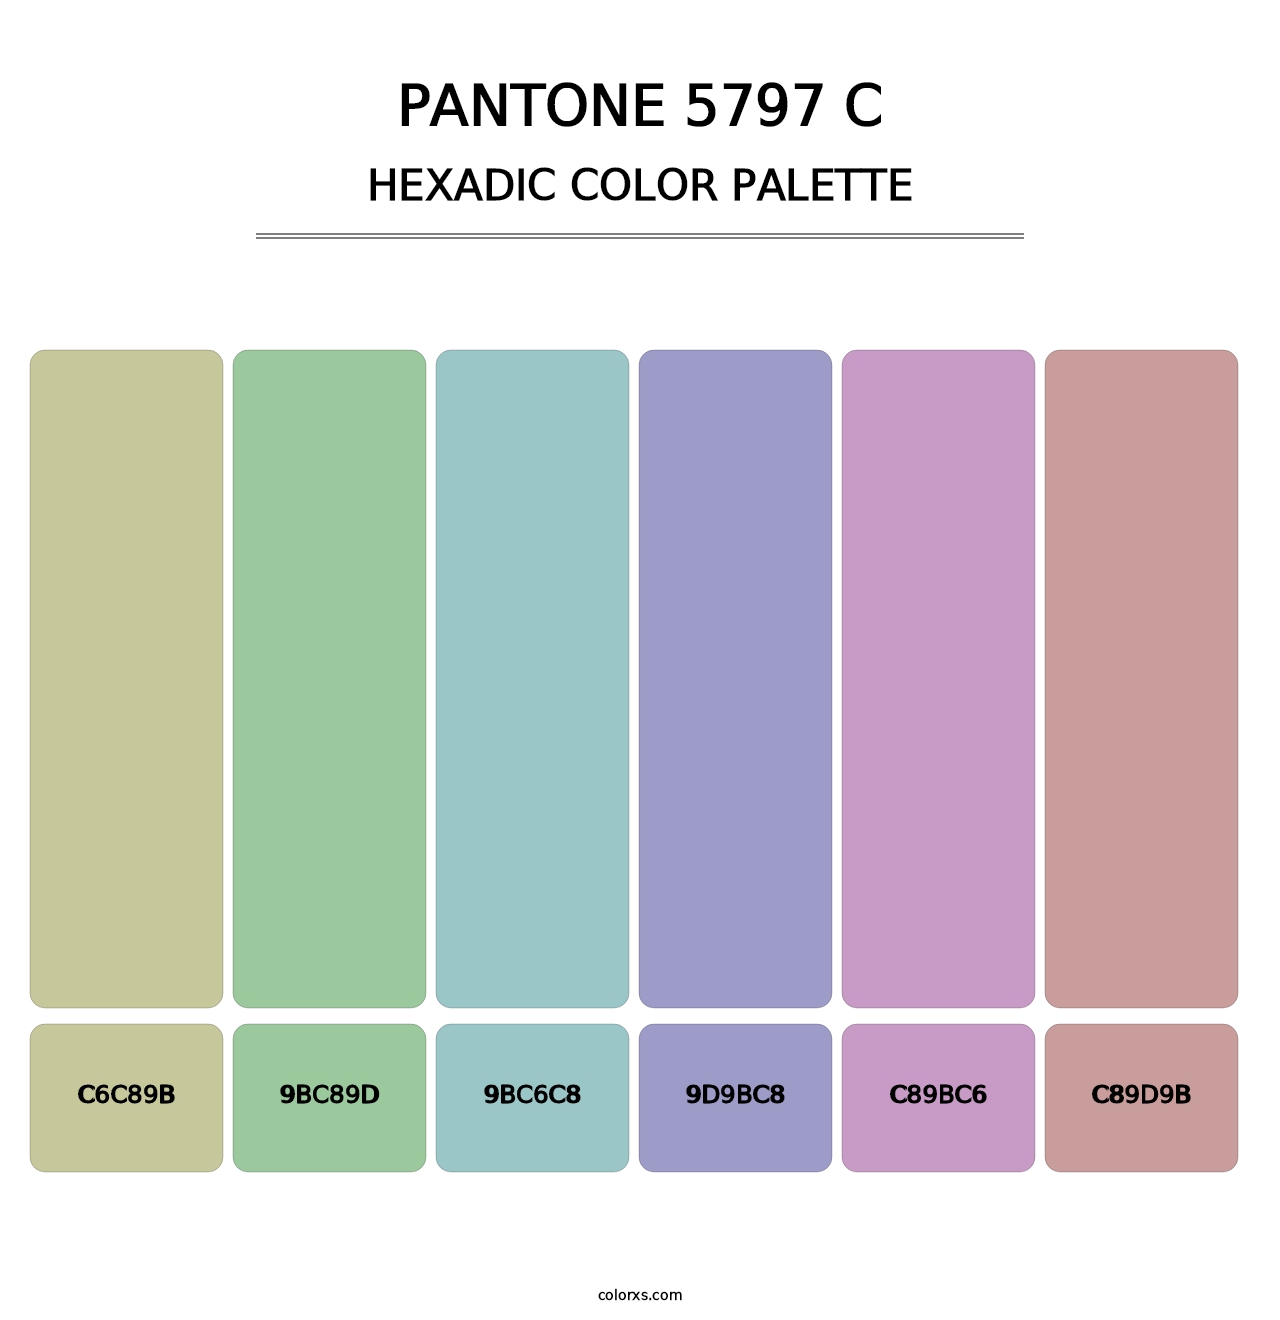 PANTONE 5797 C - Hexadic Color Palette